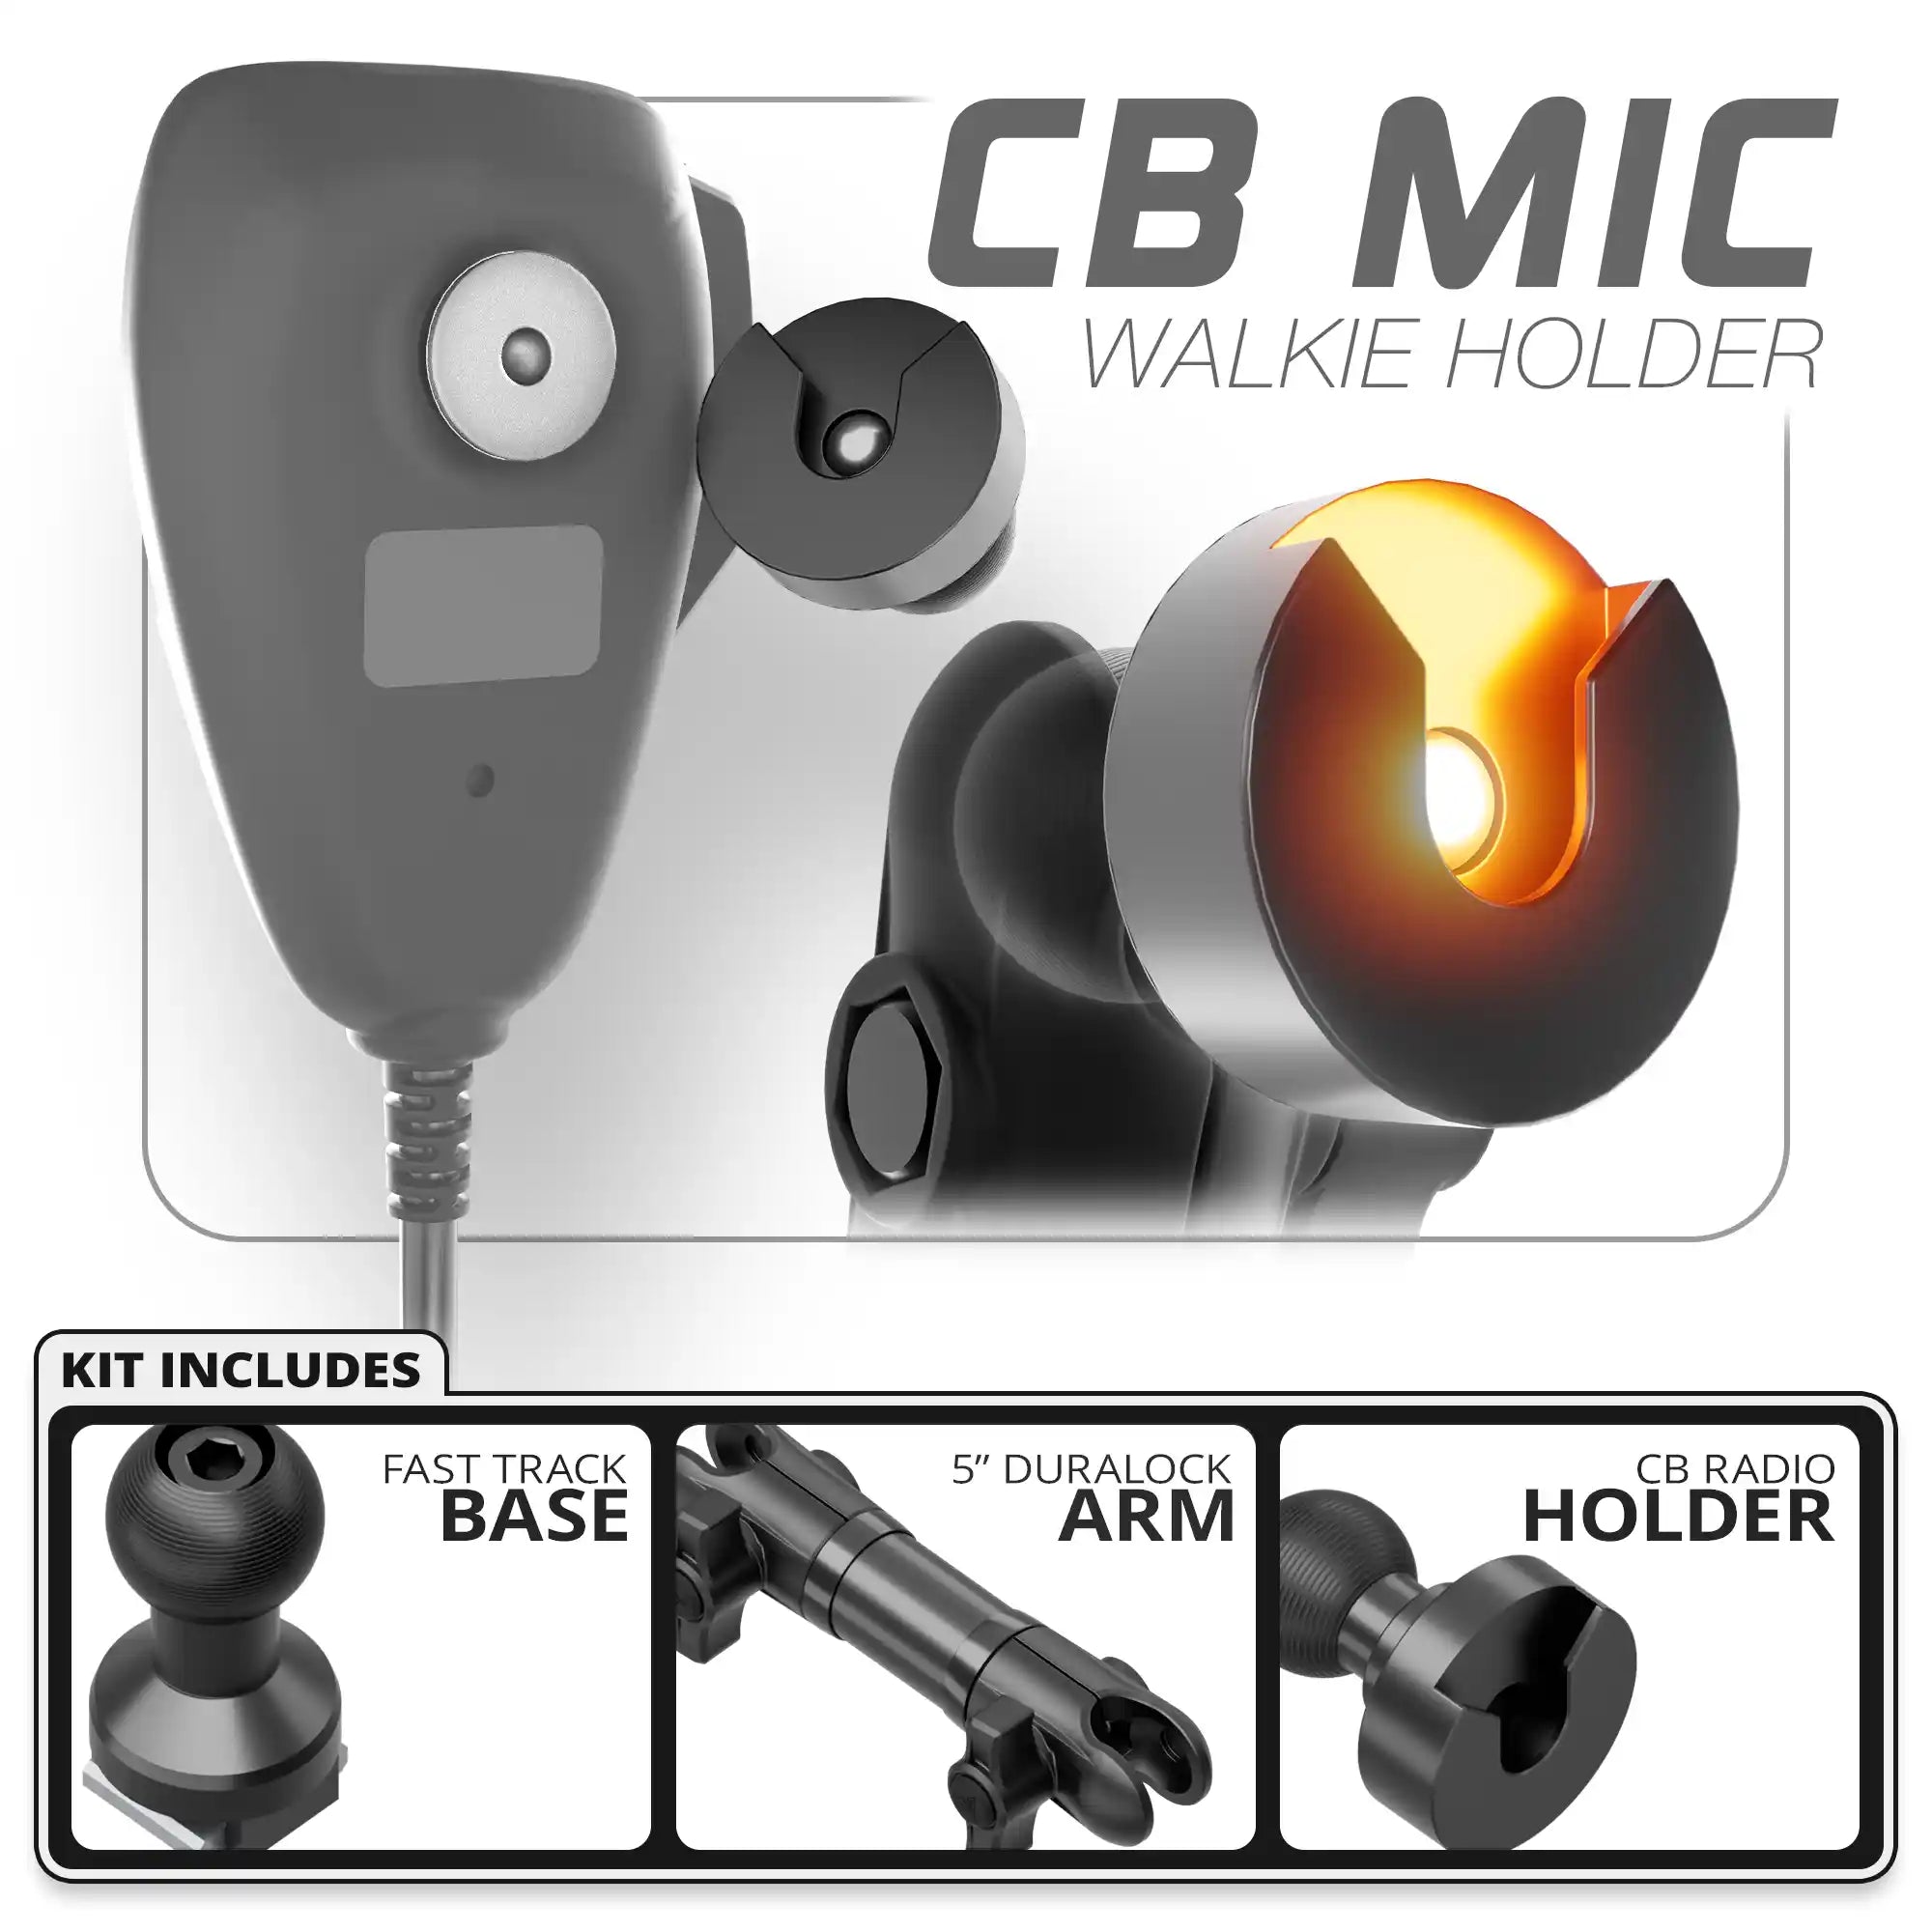 CB Radio/Microphone Holder | Fast Track Base | 5" DuraLock Arm